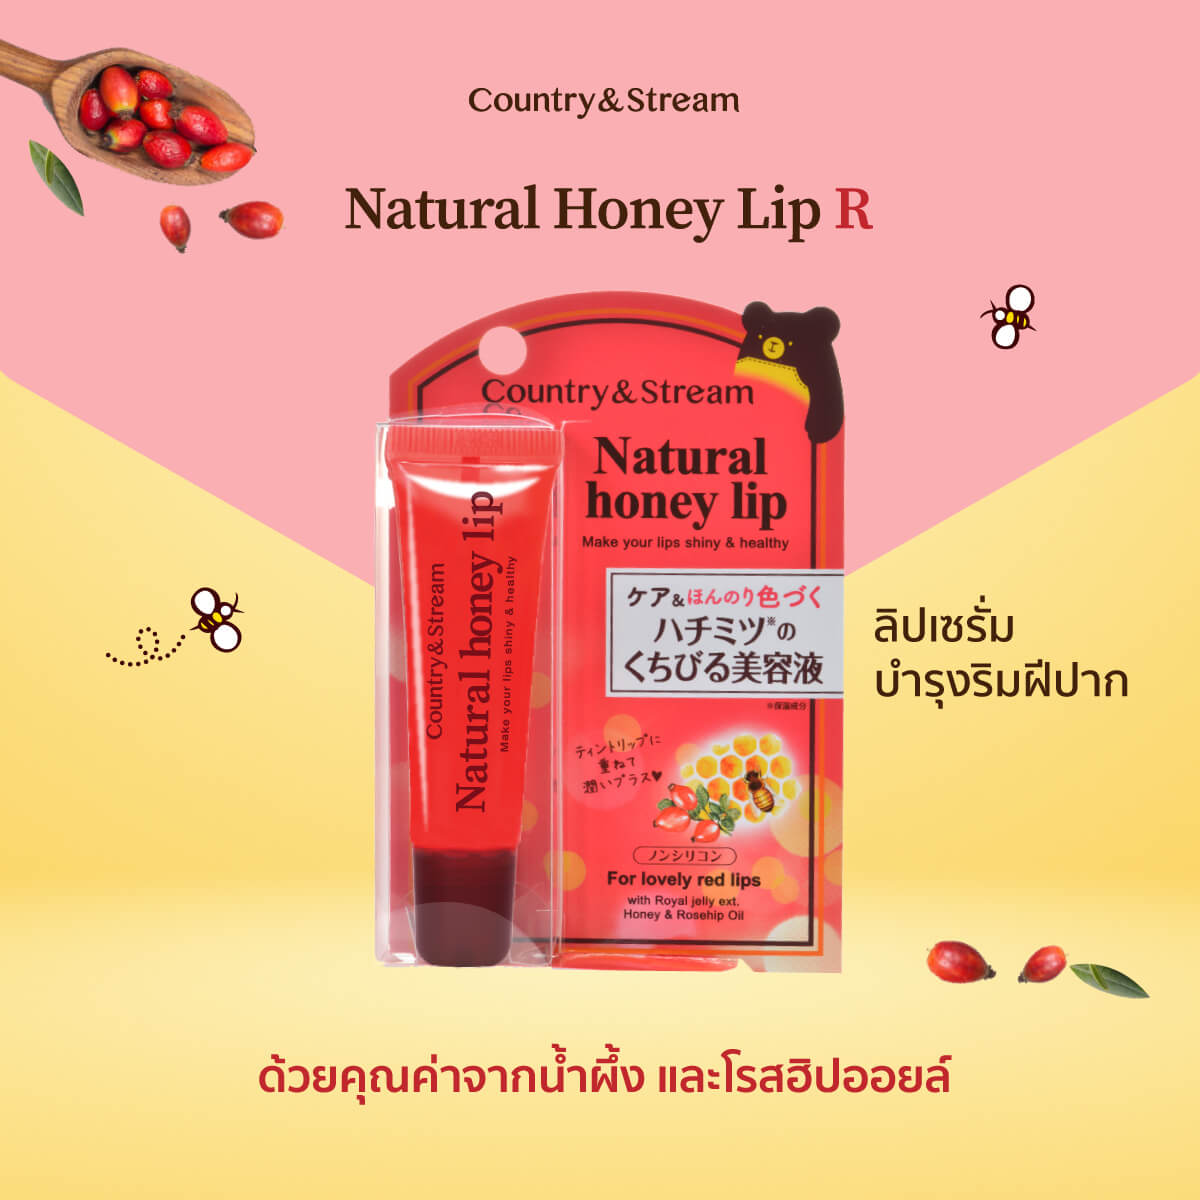 Country&Stream Natural Honey Lip R 10 g ลิปเซรั่มบำรุงริมฝีปากด้วยคุณค่าจากน้ำผึ้ง และรอยัลเจลลี่ สีแดงระเรื่อ ให้ริมฝีปากอมชมพูสุขภาพดี